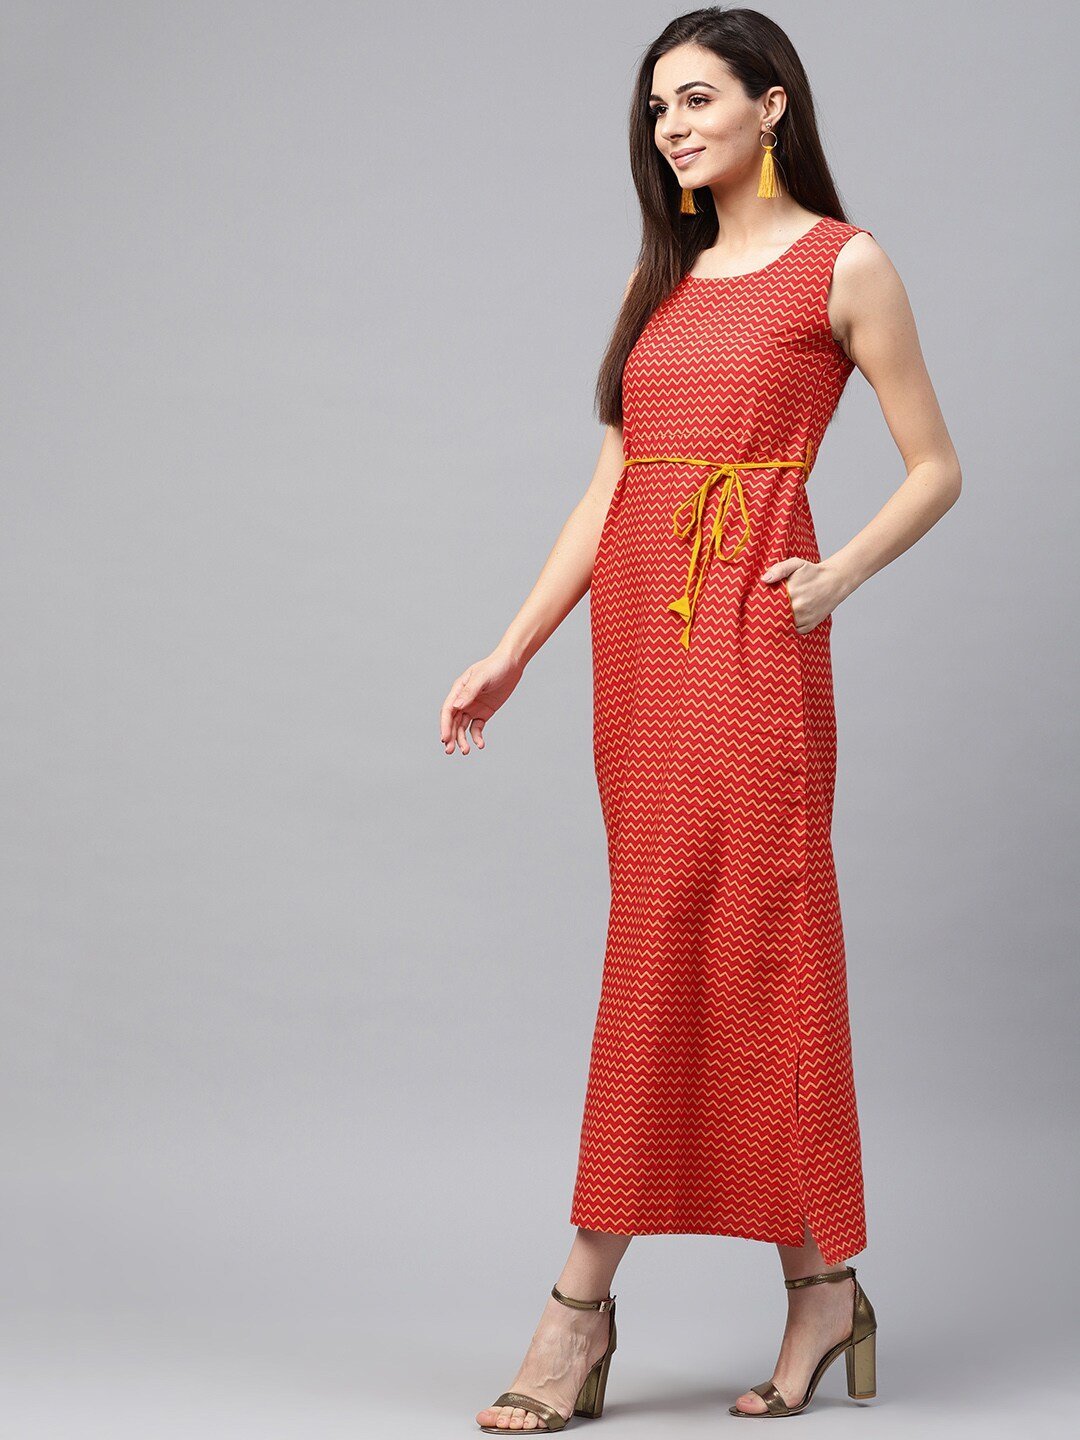 Women's  Red & Mustard Yellow Maxi Dress - AKS